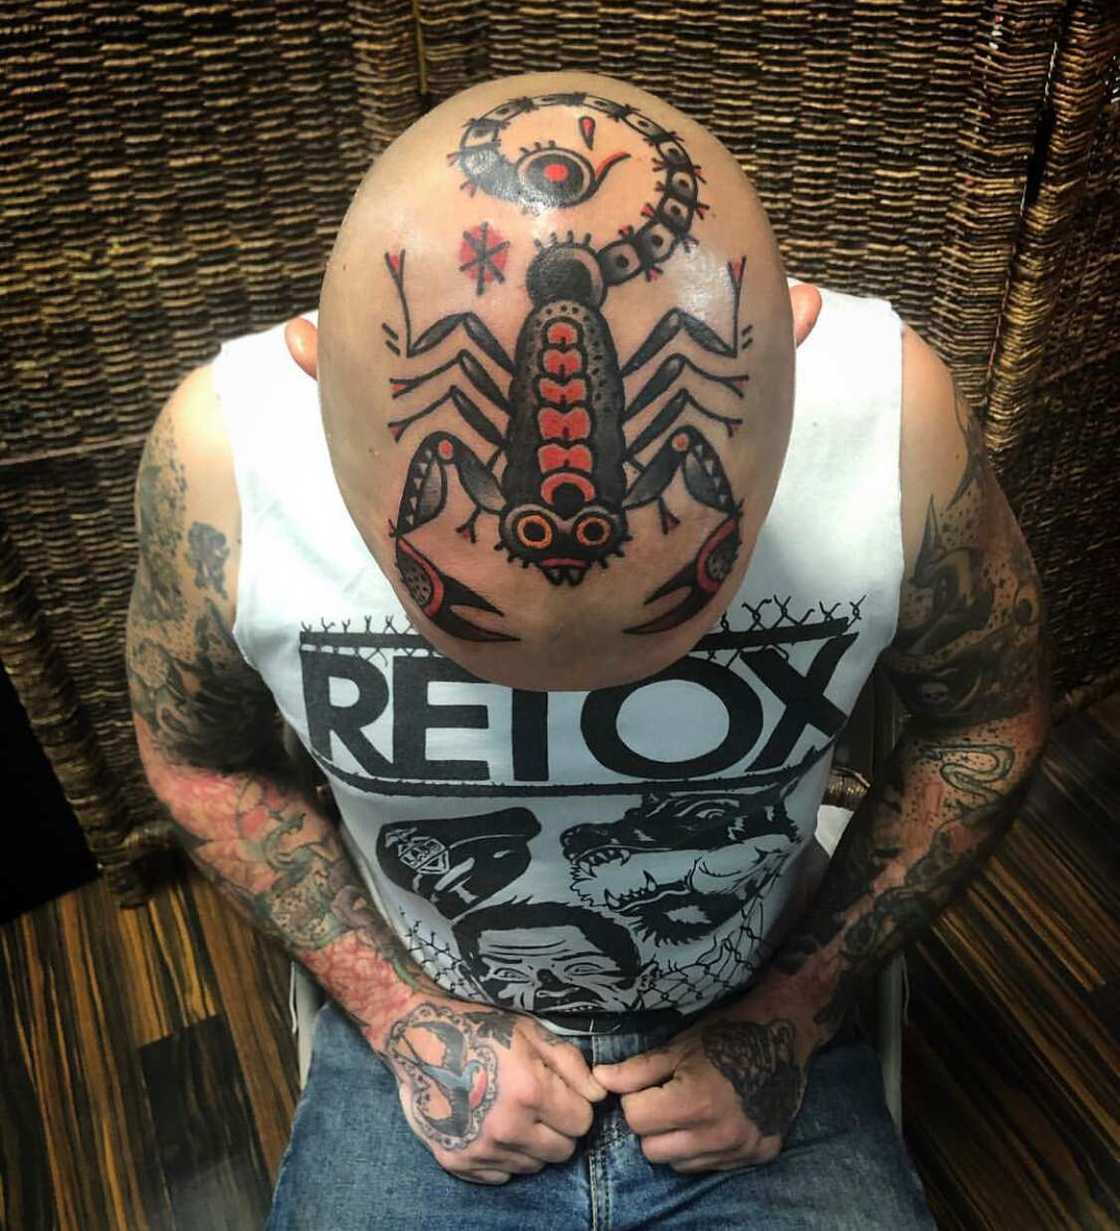 Scorpion tattoo design